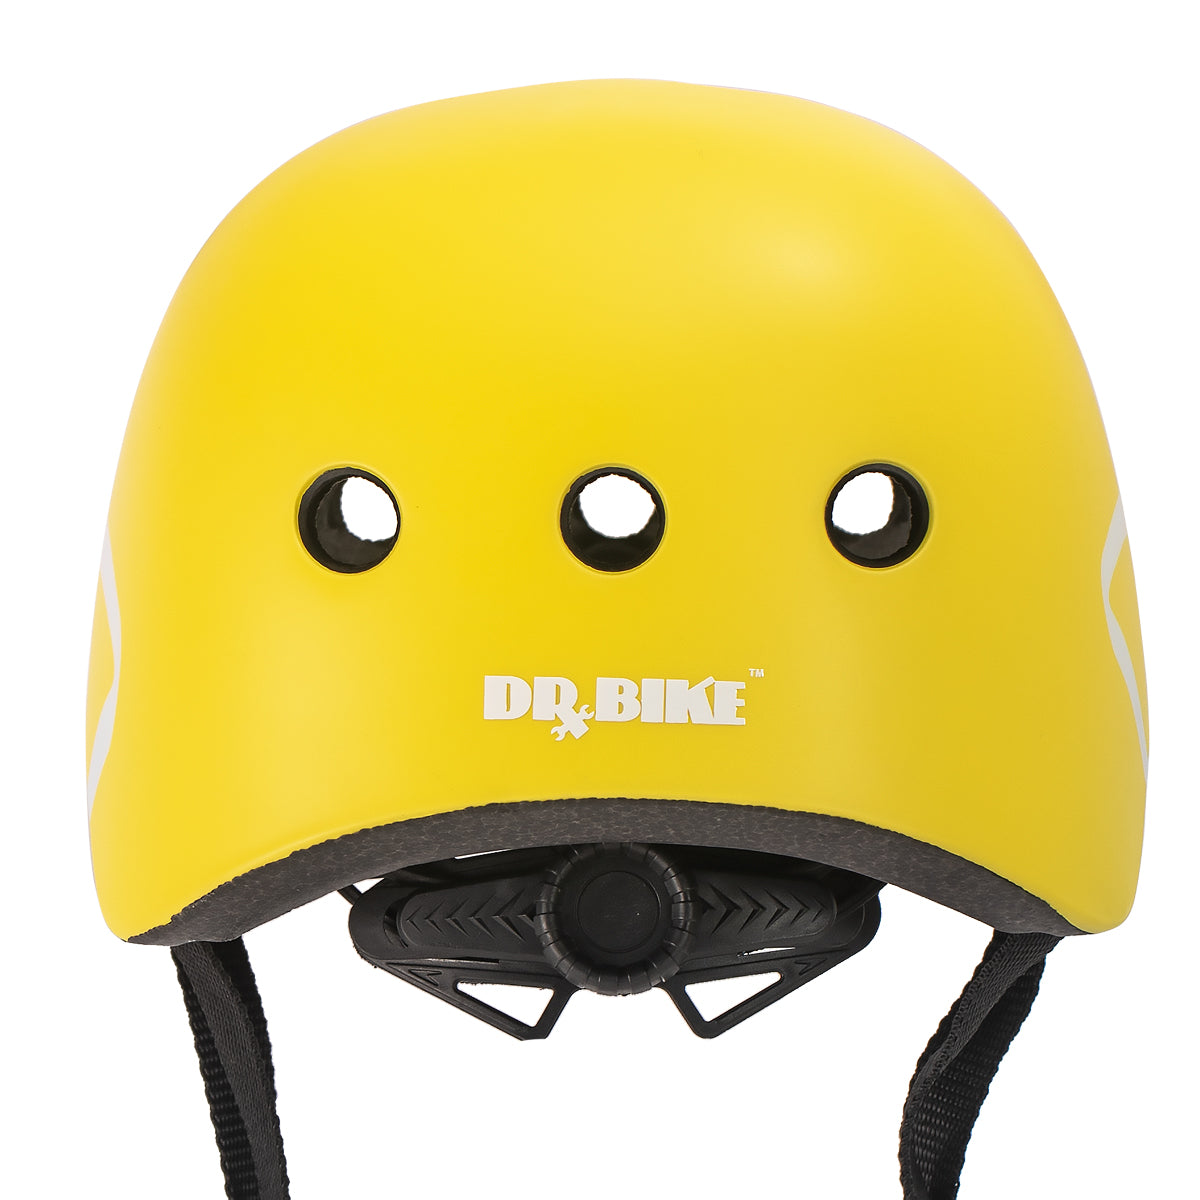 JOYSTAR Kids Bike Helmet